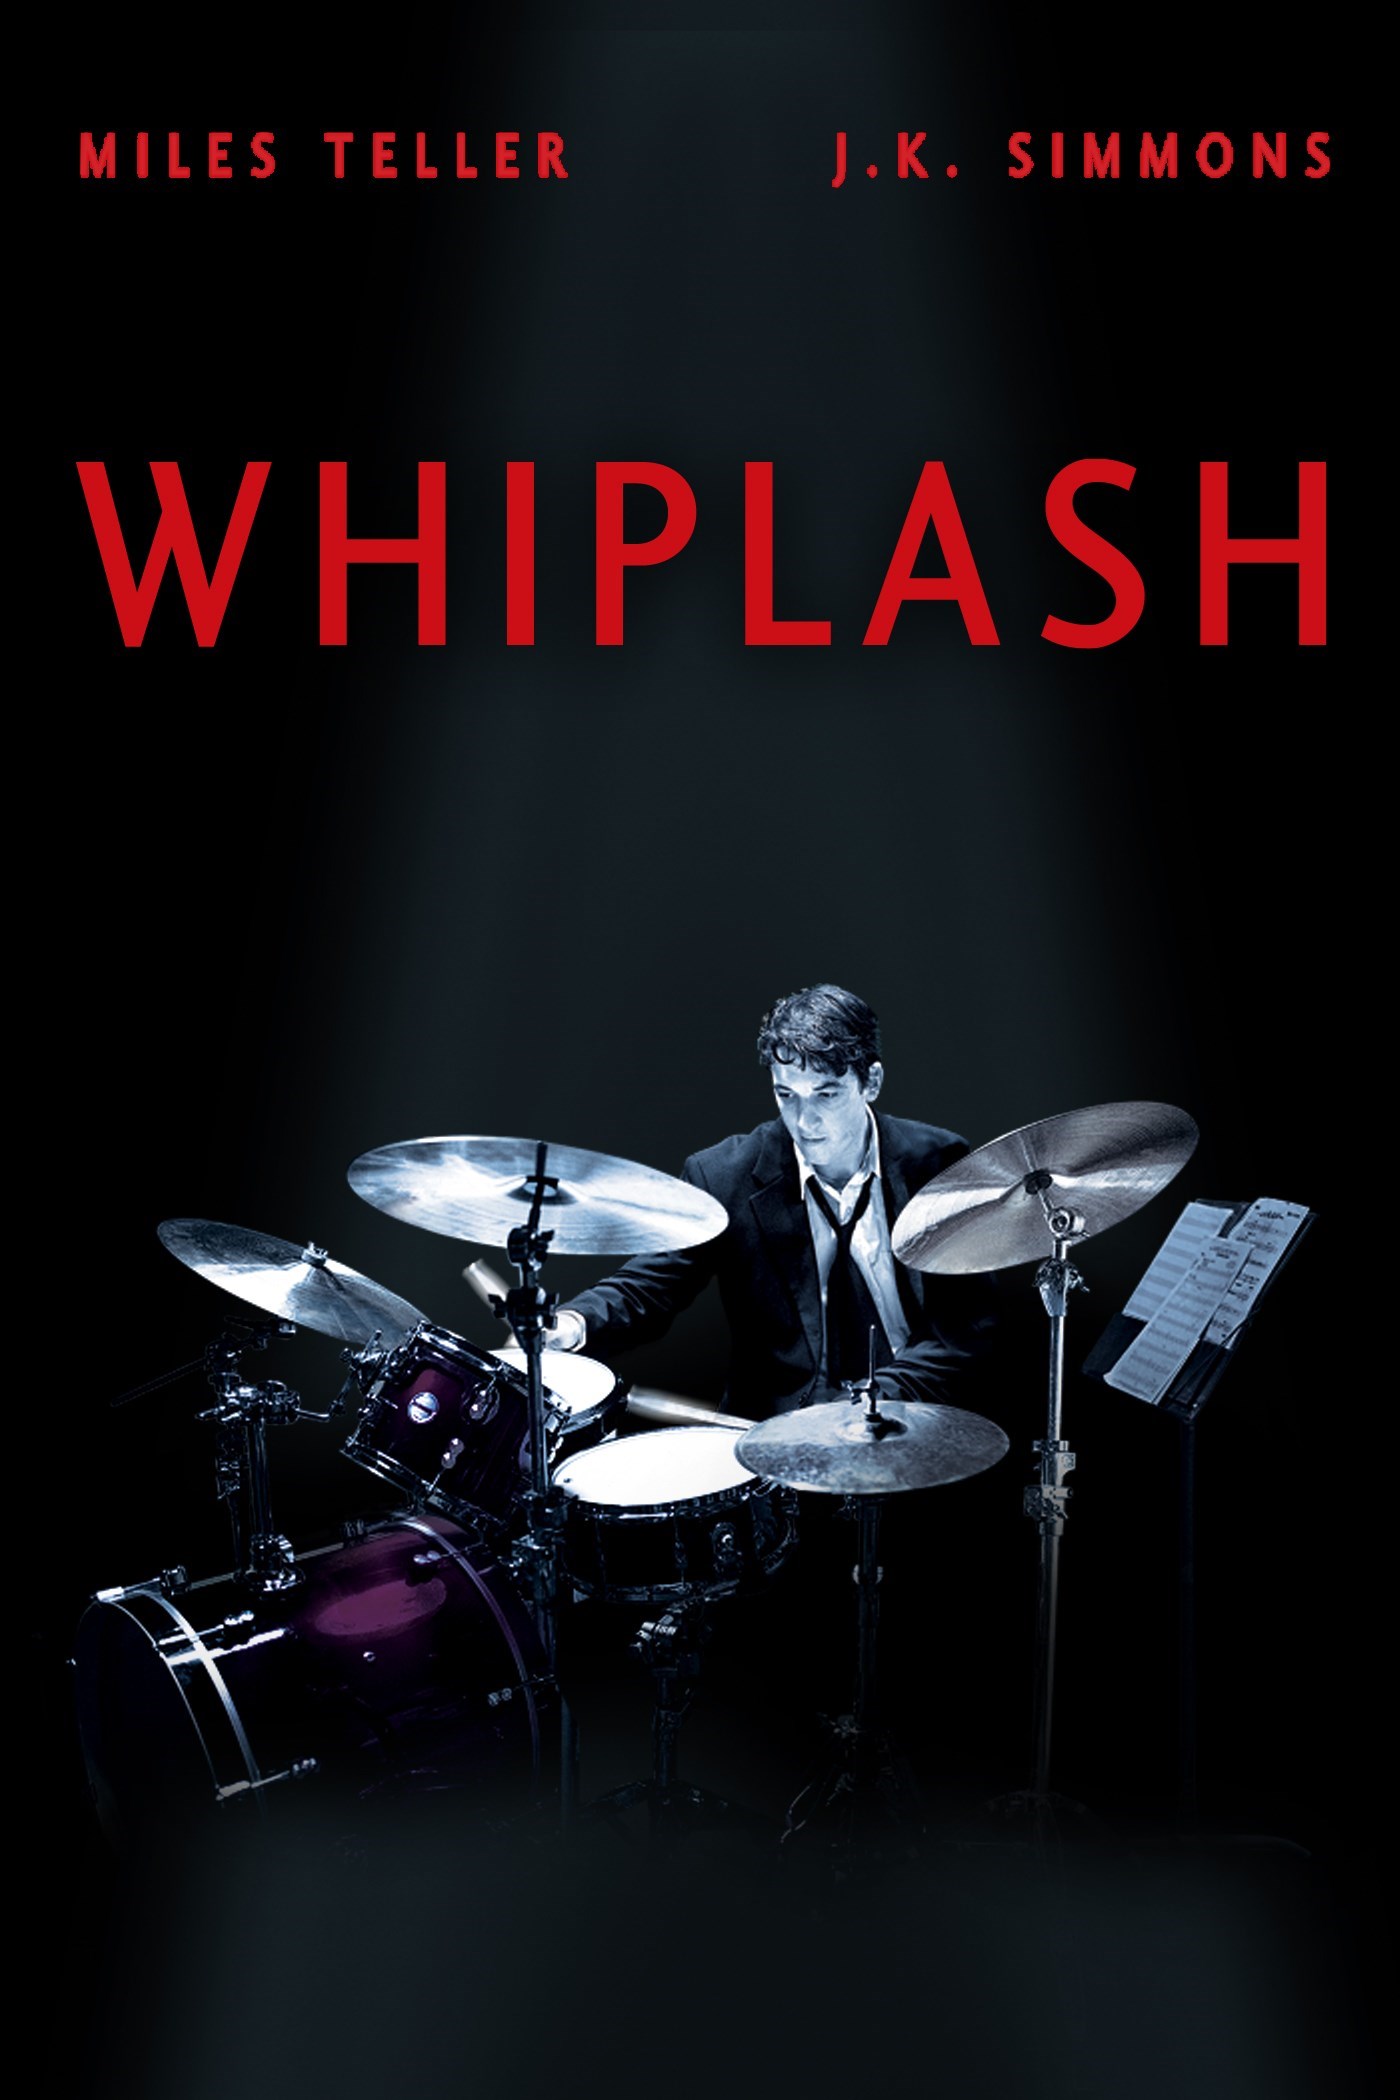 Whiplash (2014) ★★★★☆